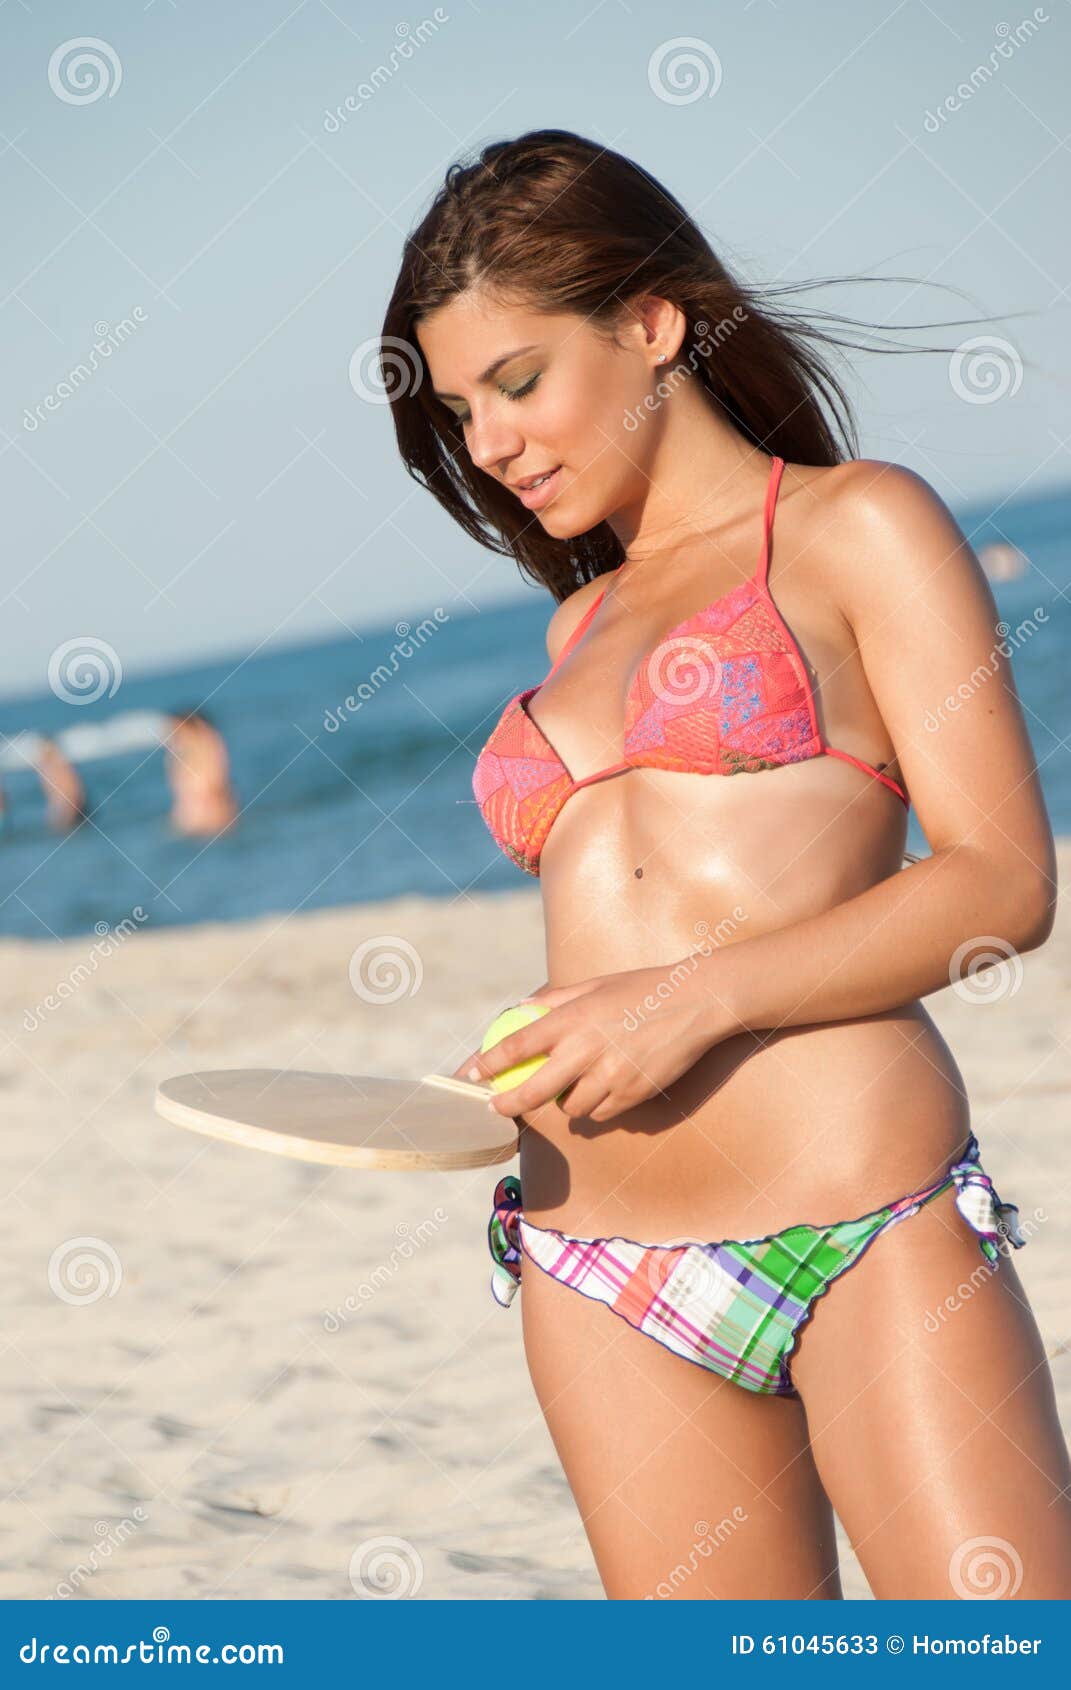 Woman In Bikini Holding A Beach Racket Stock Image Image Of Charm